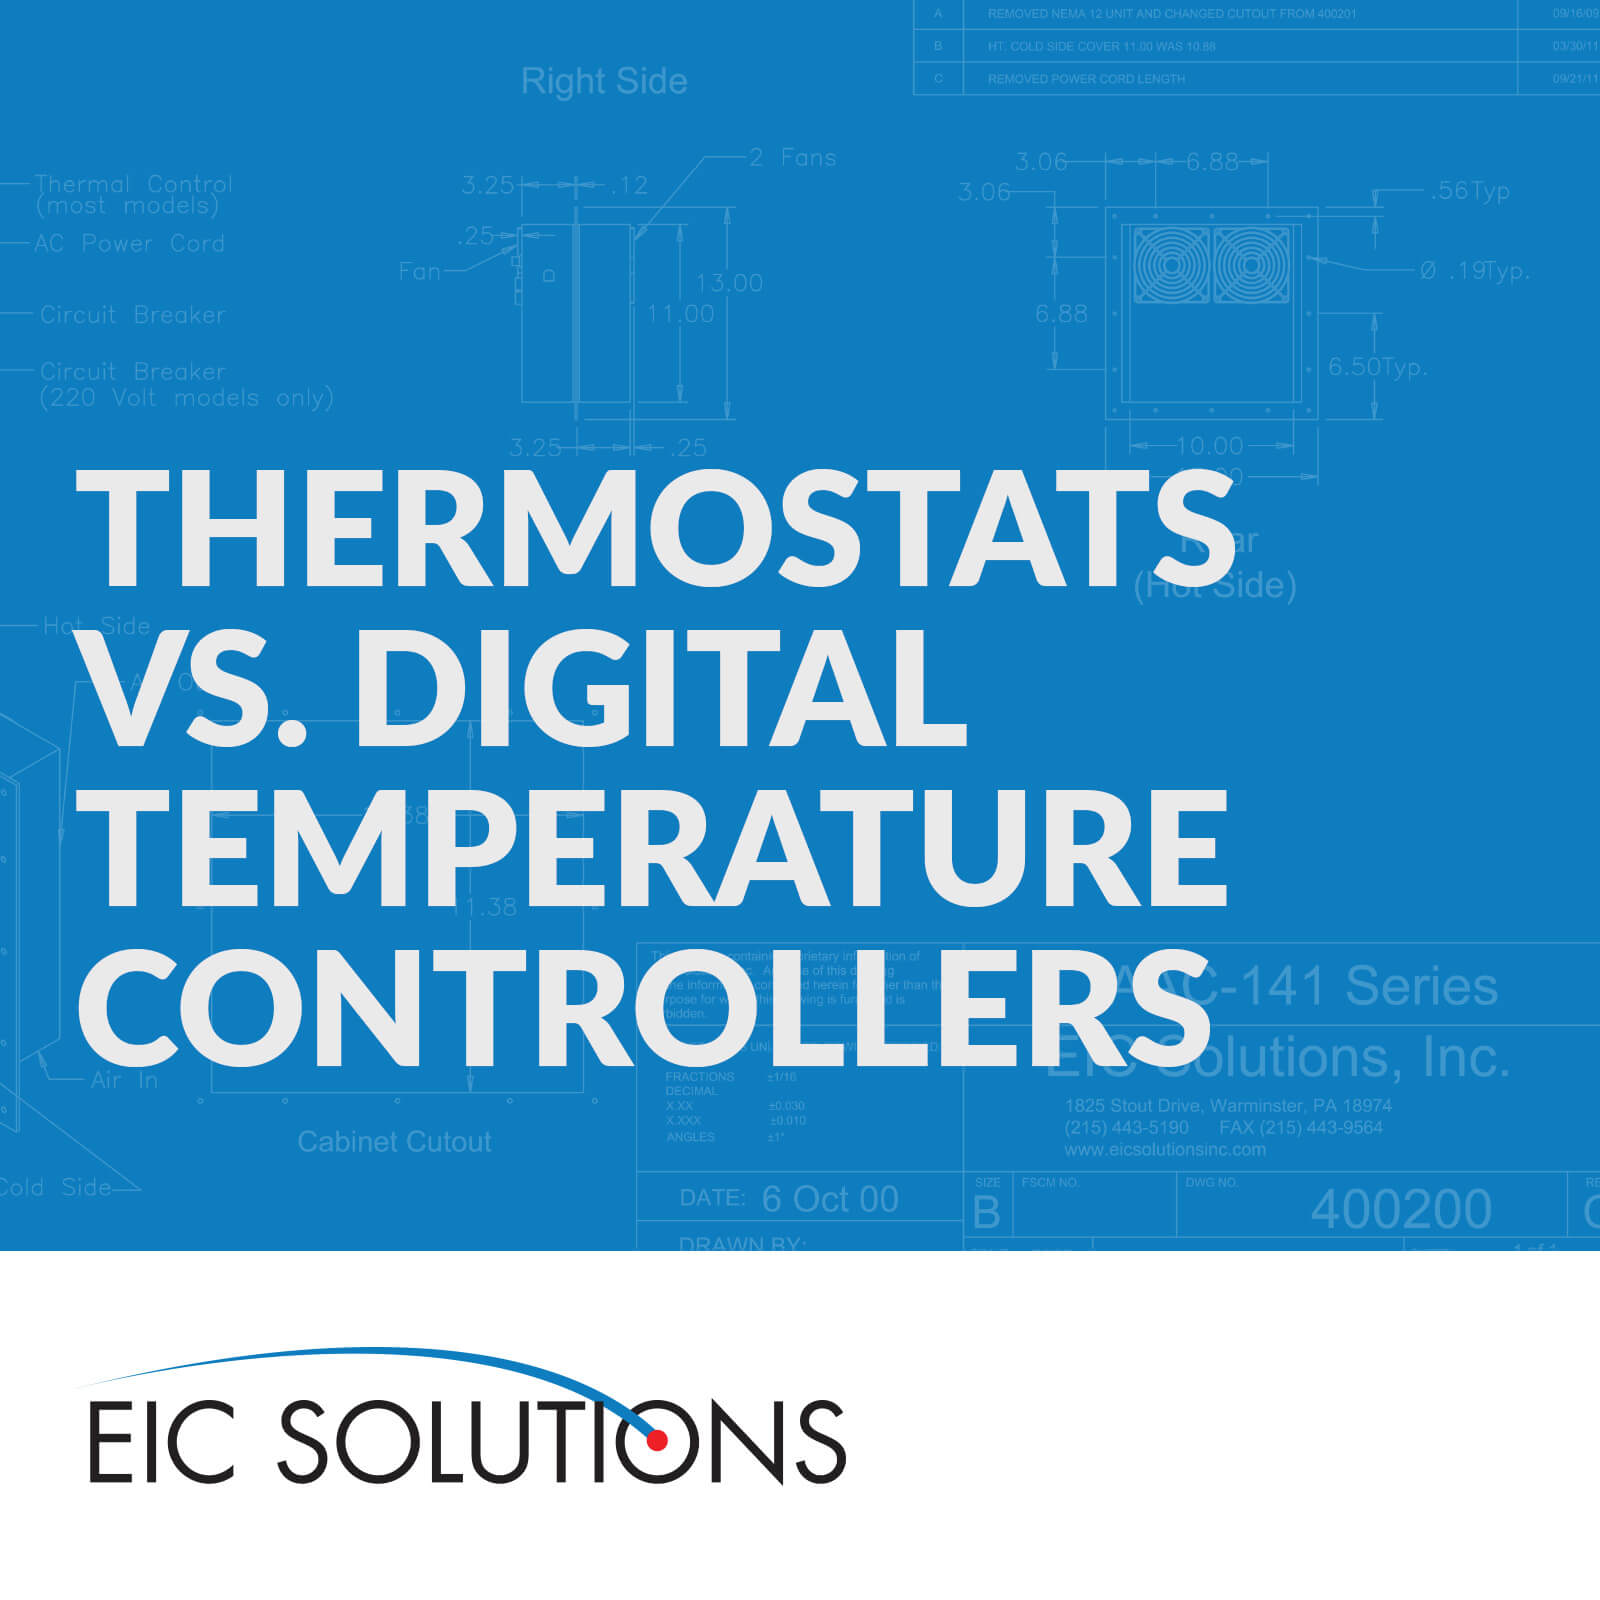 Thermostats vs. Digital Temperature Controllers graphic